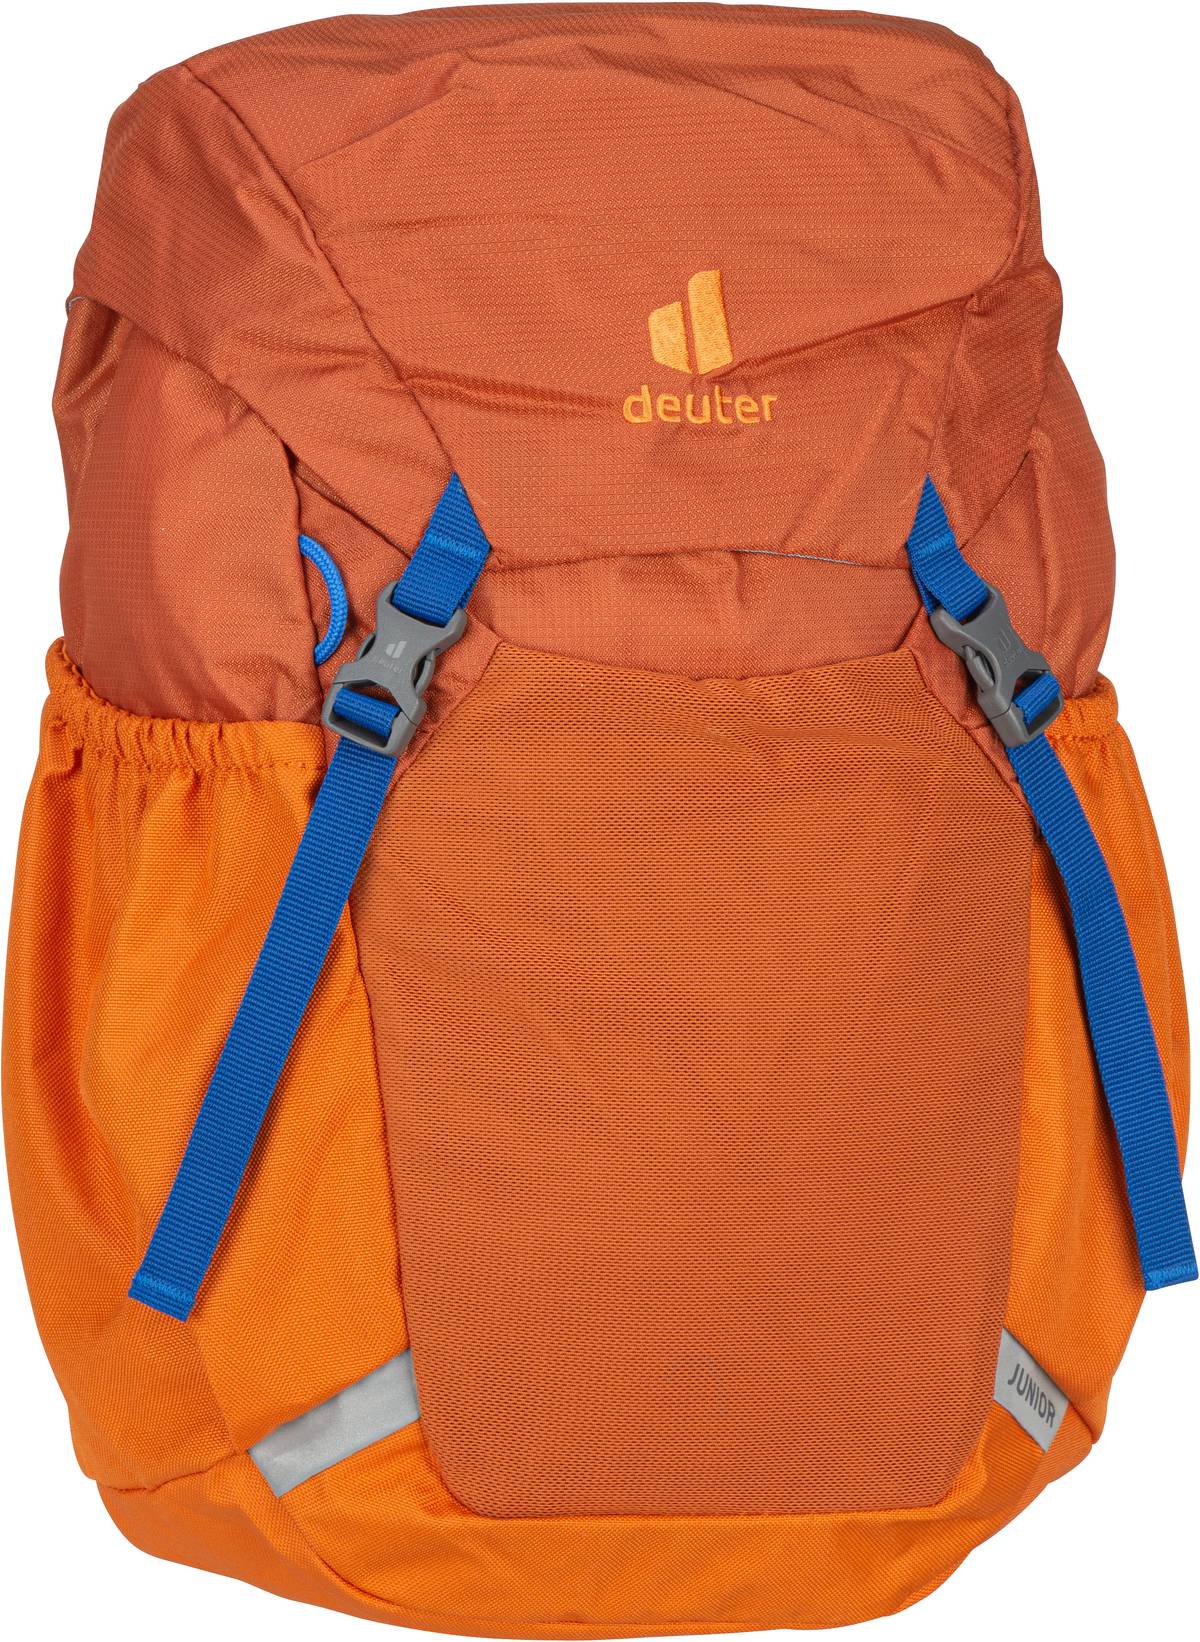 Deuter Junior  in Orange (18 Liter), Rucksack / Backpack